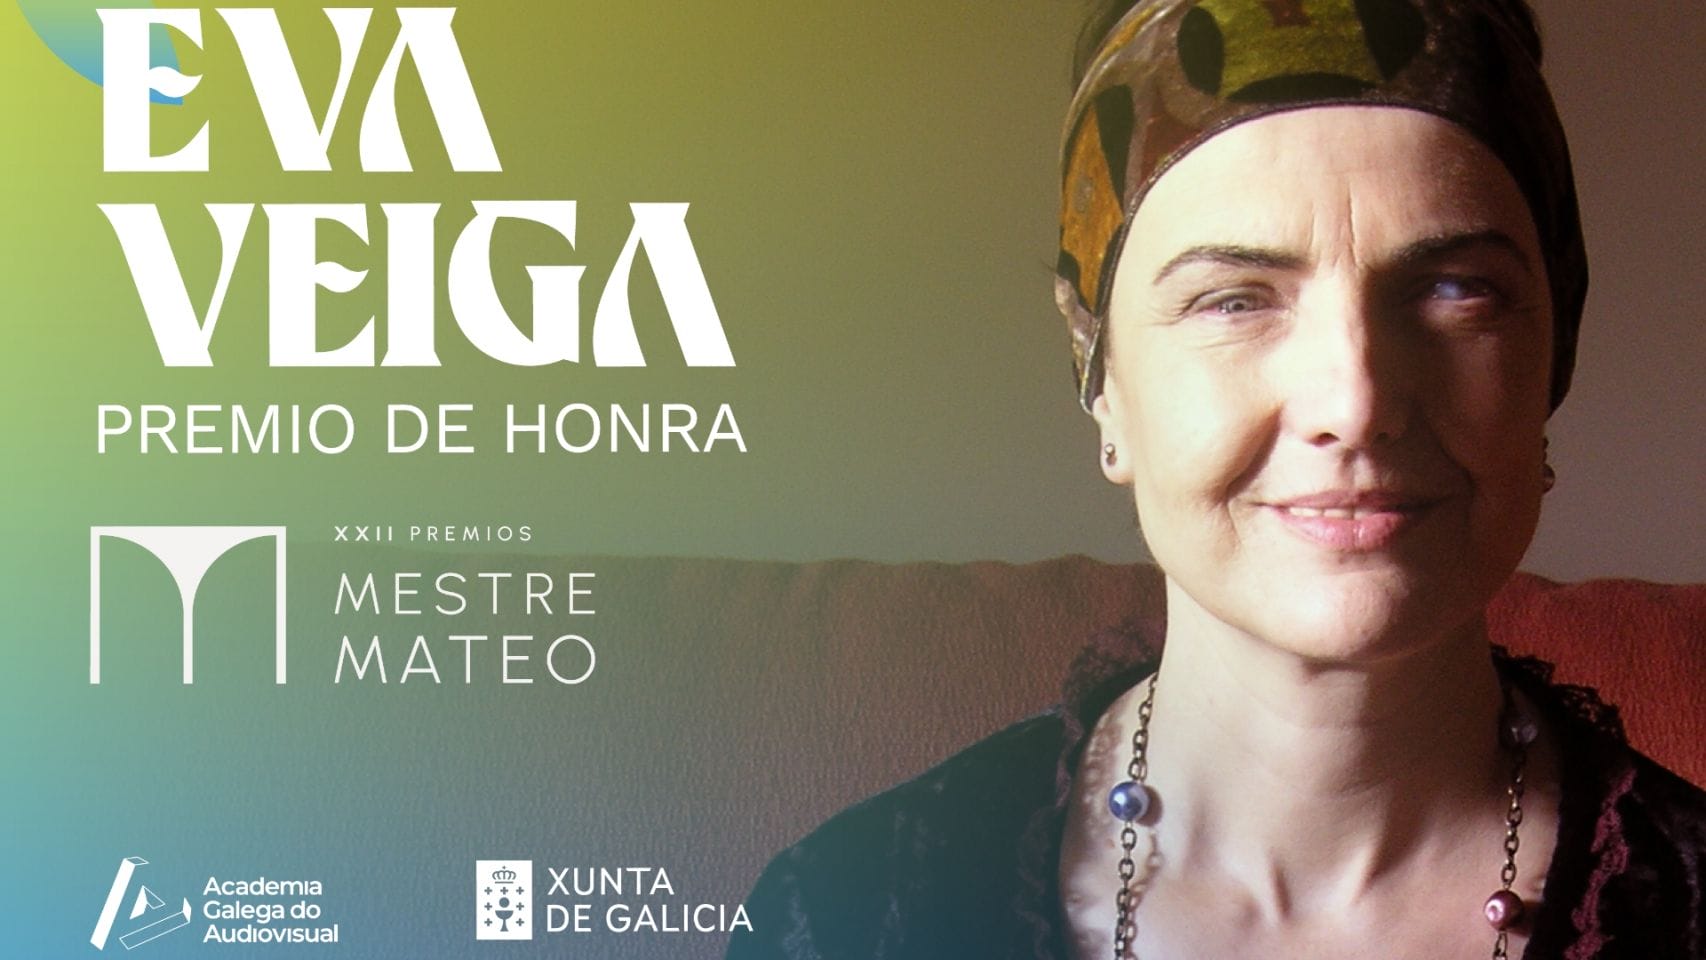 Eva Veiga, Premio de Honra Fernando Rey.